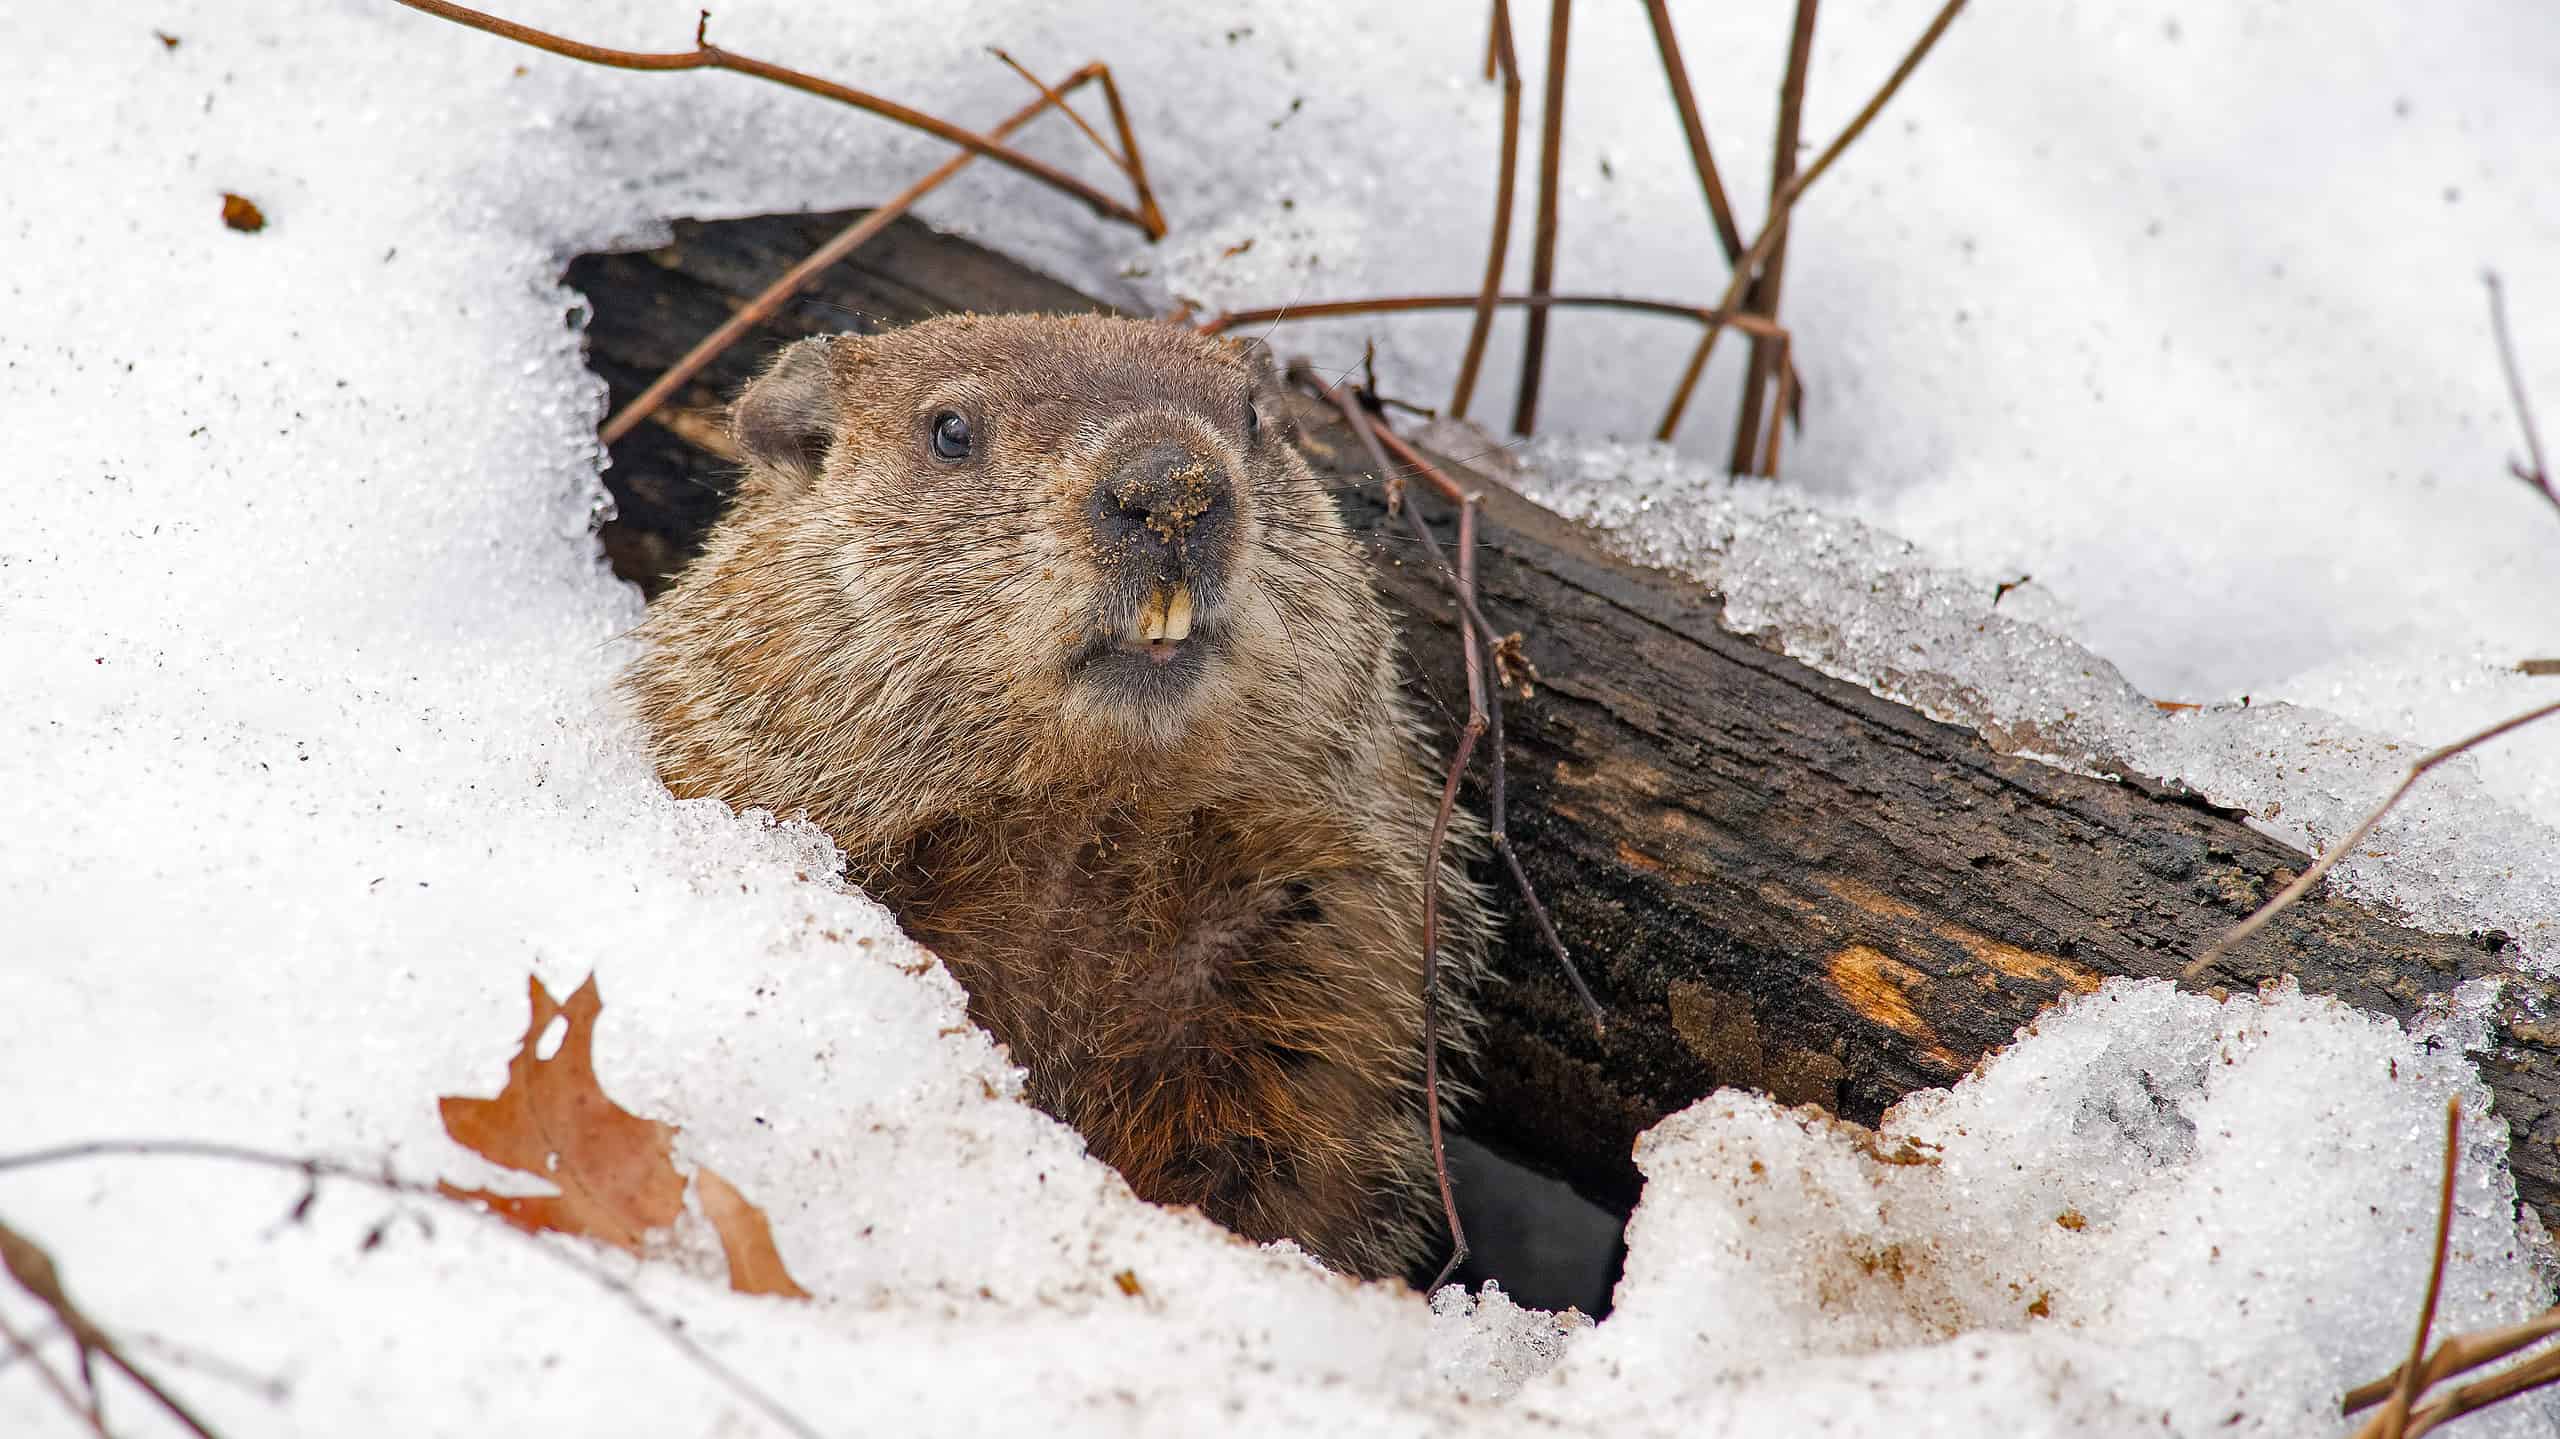 Groundhog emerging from winter den